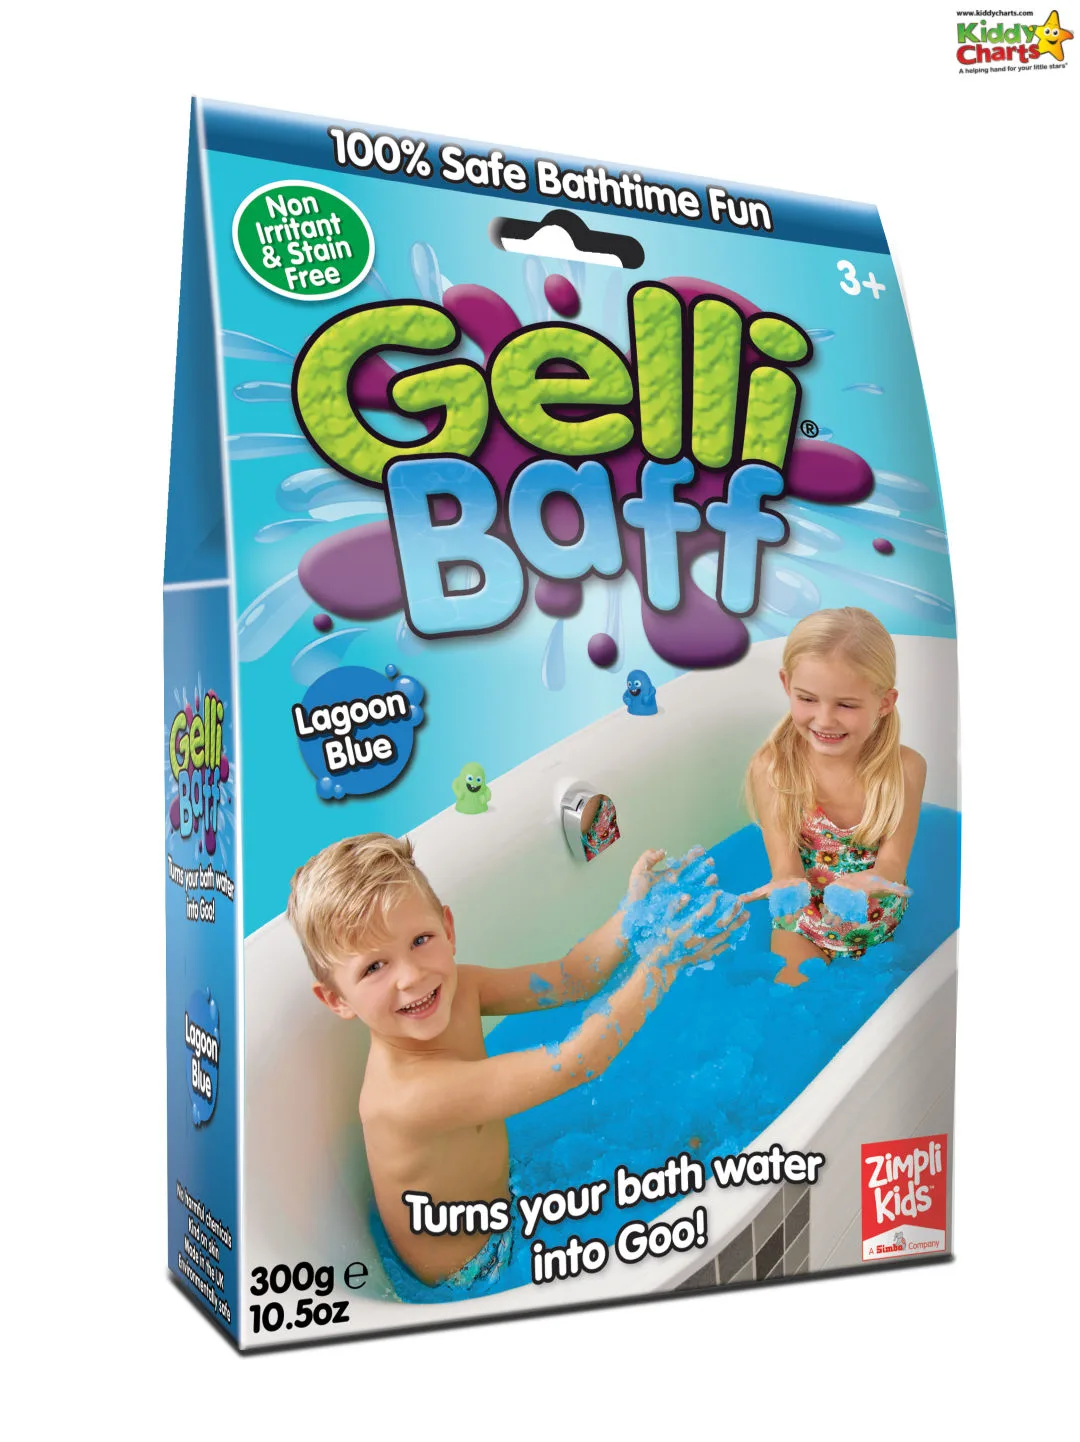 Gelli baff - boredom busters gift guide